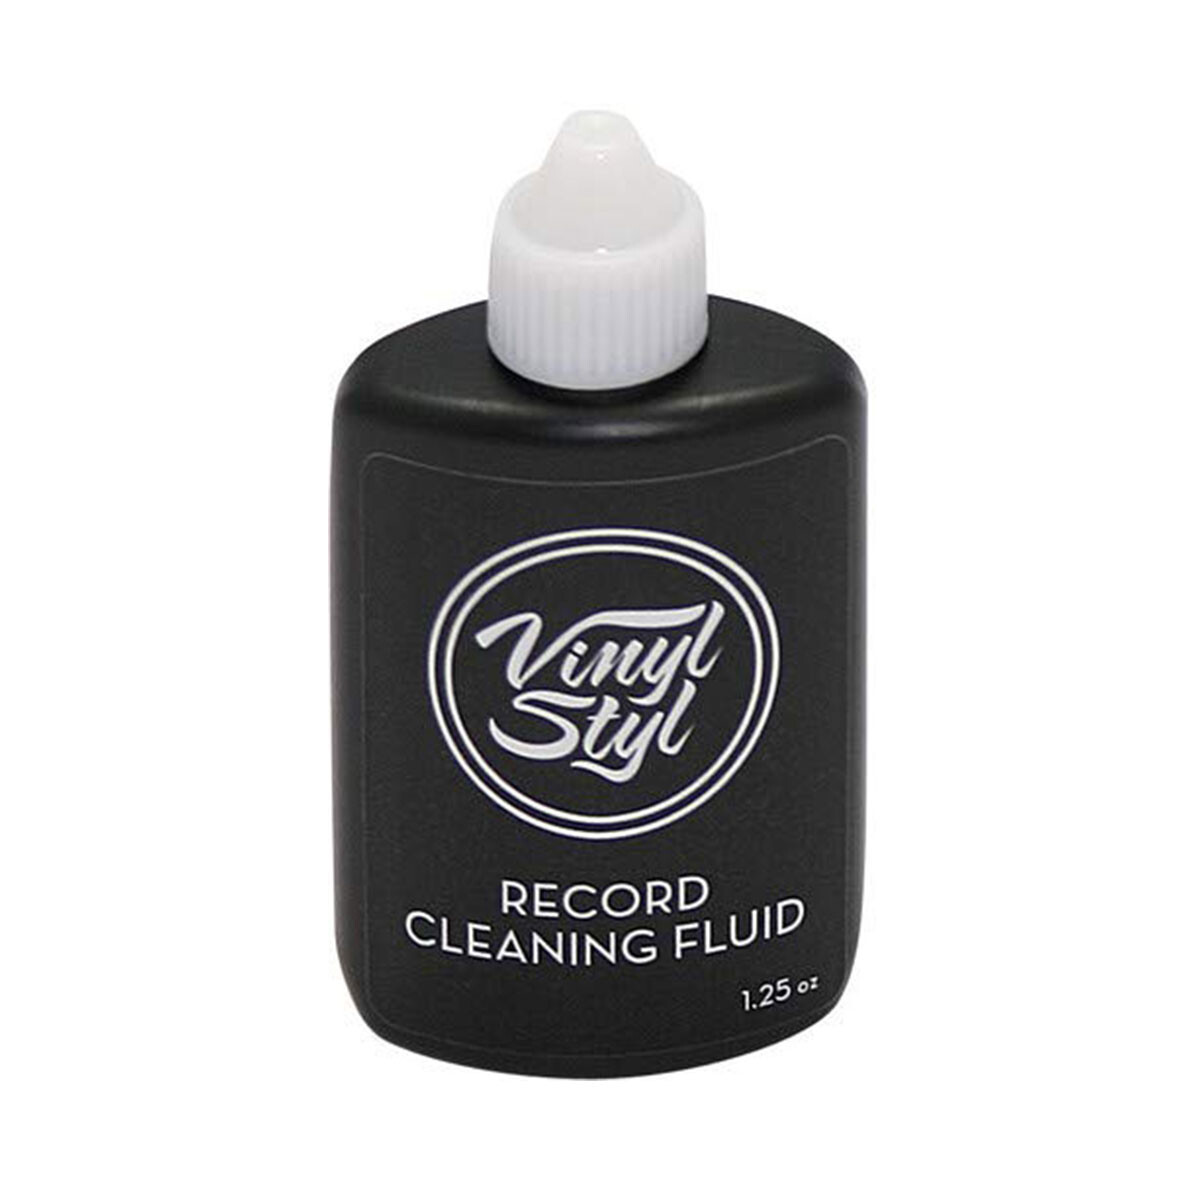 Vinyl Styl Lp Deep Cleaning System Vs-a-004 